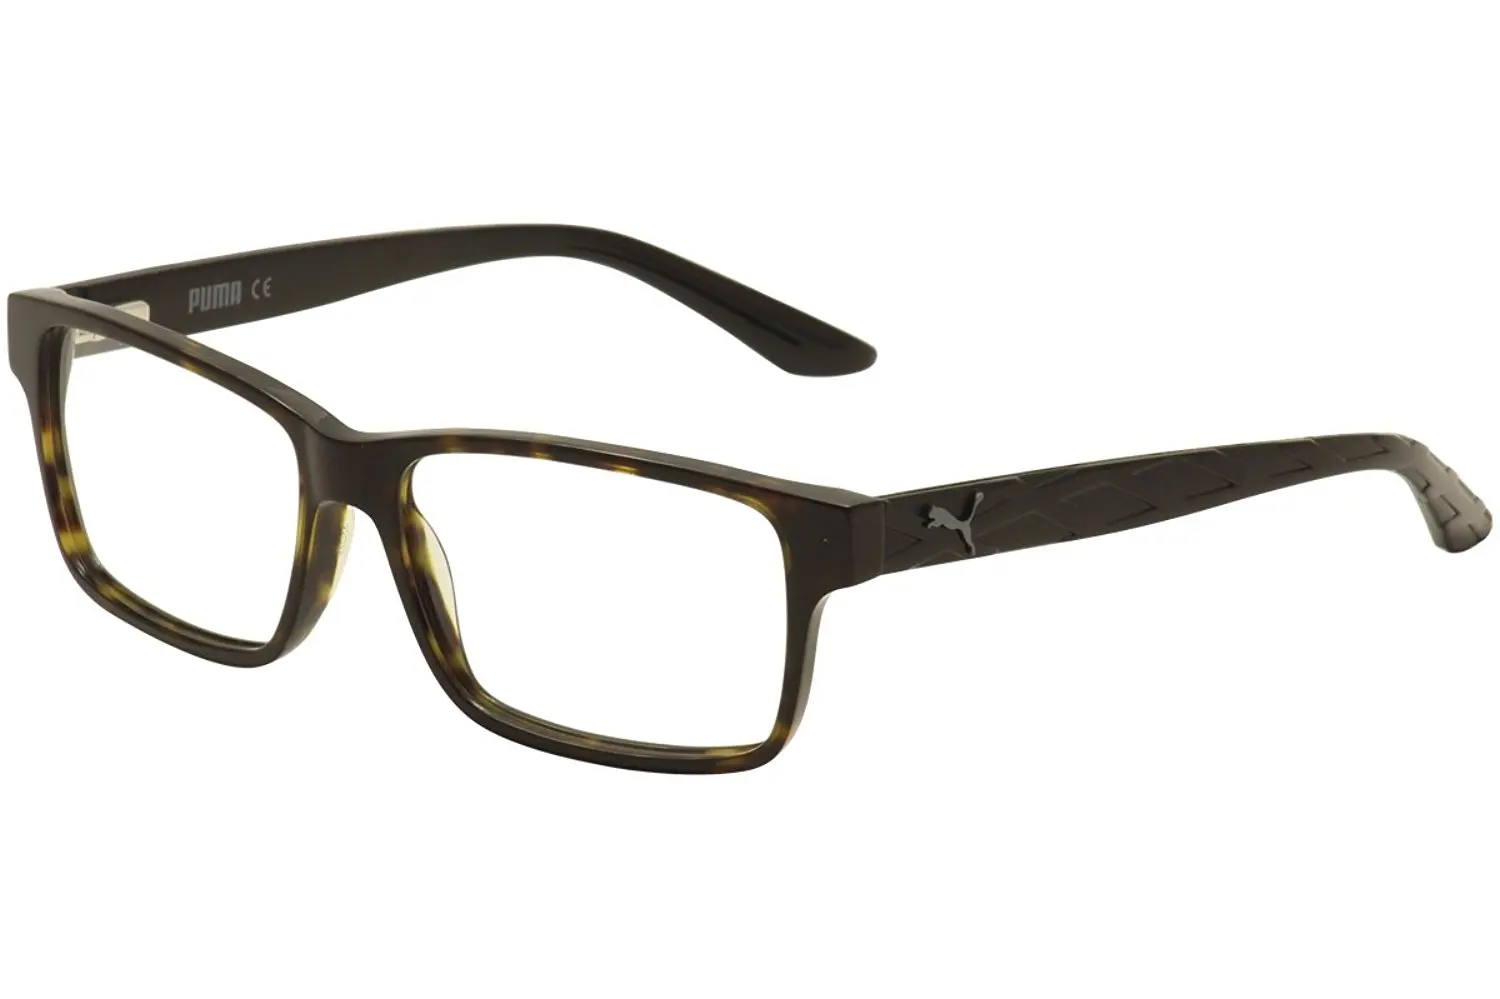 puma glasses frames price